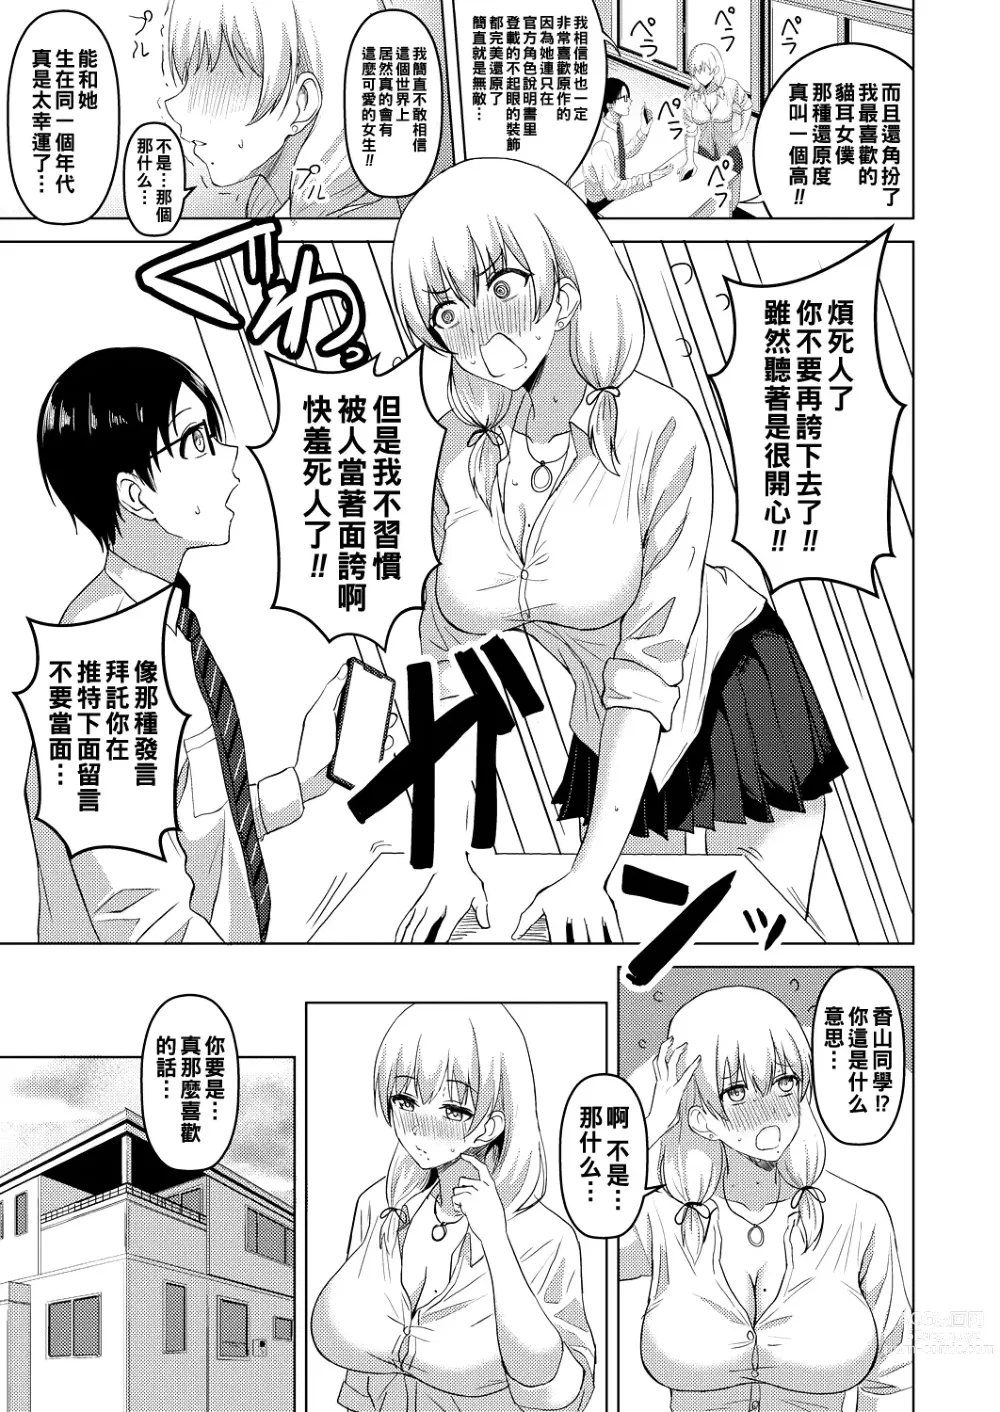 Page 3 of manga JK Cosplayer Kayama-san